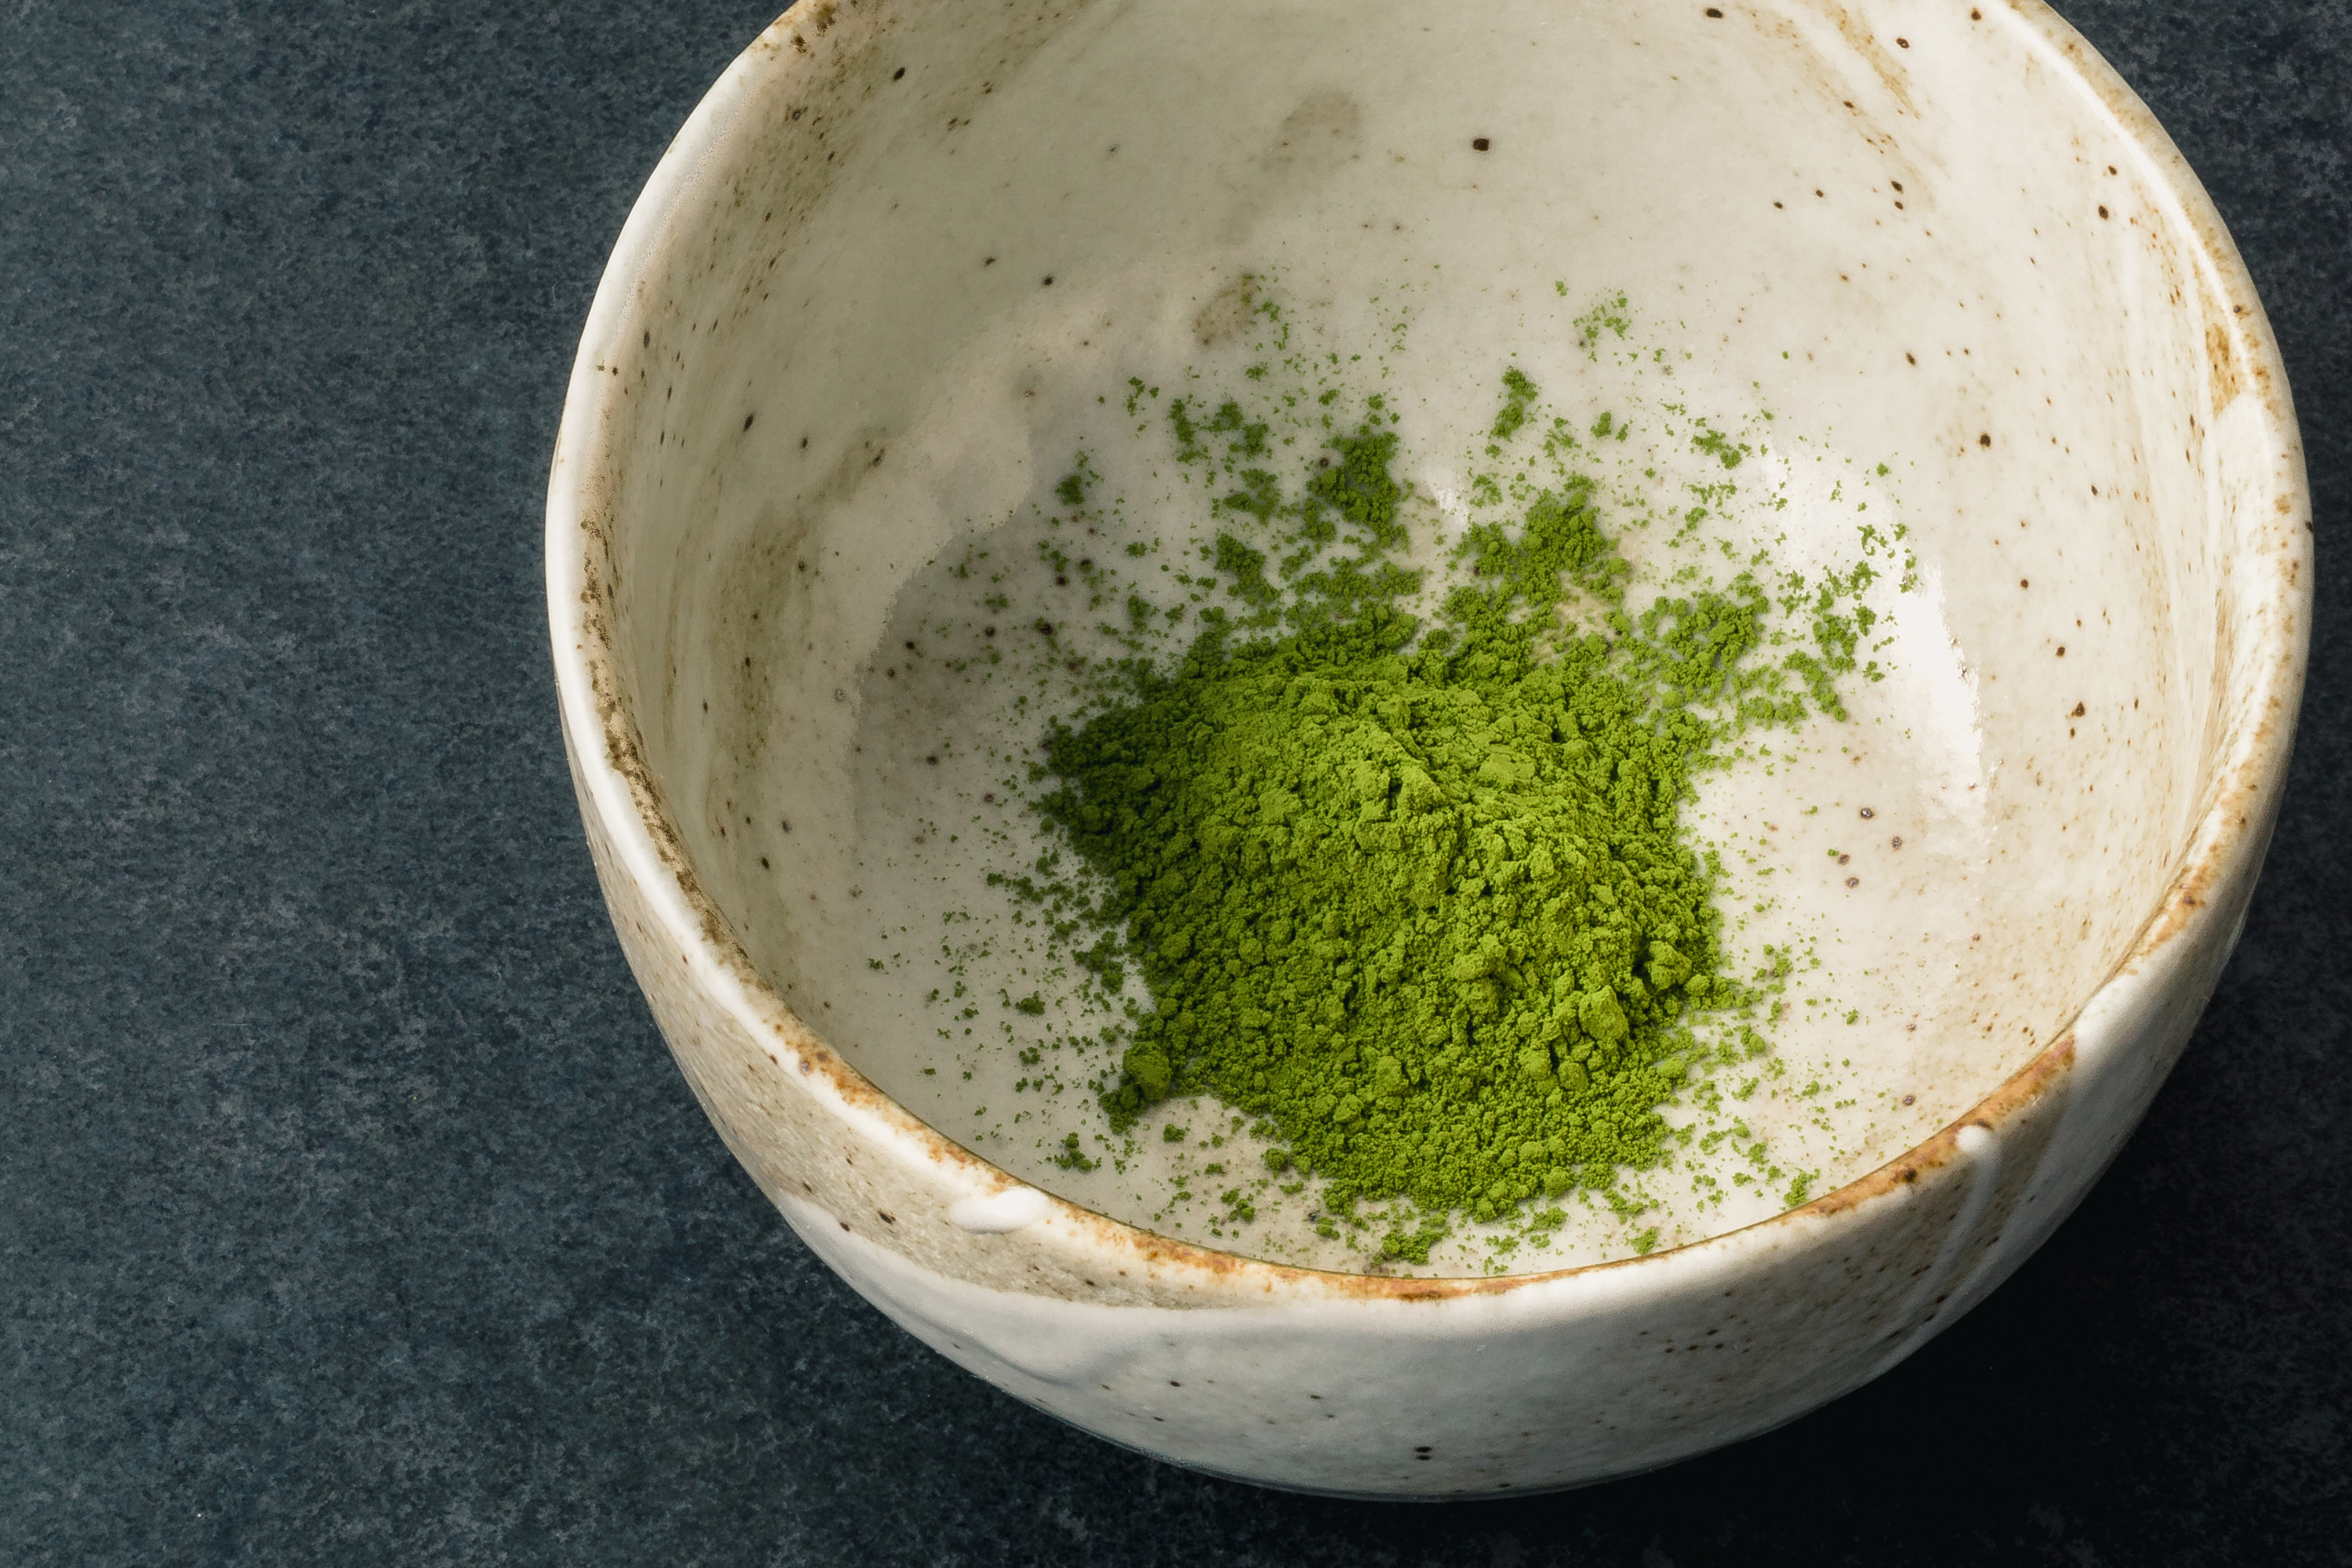 Chawan matcha tea bowl with green matcha powder inside